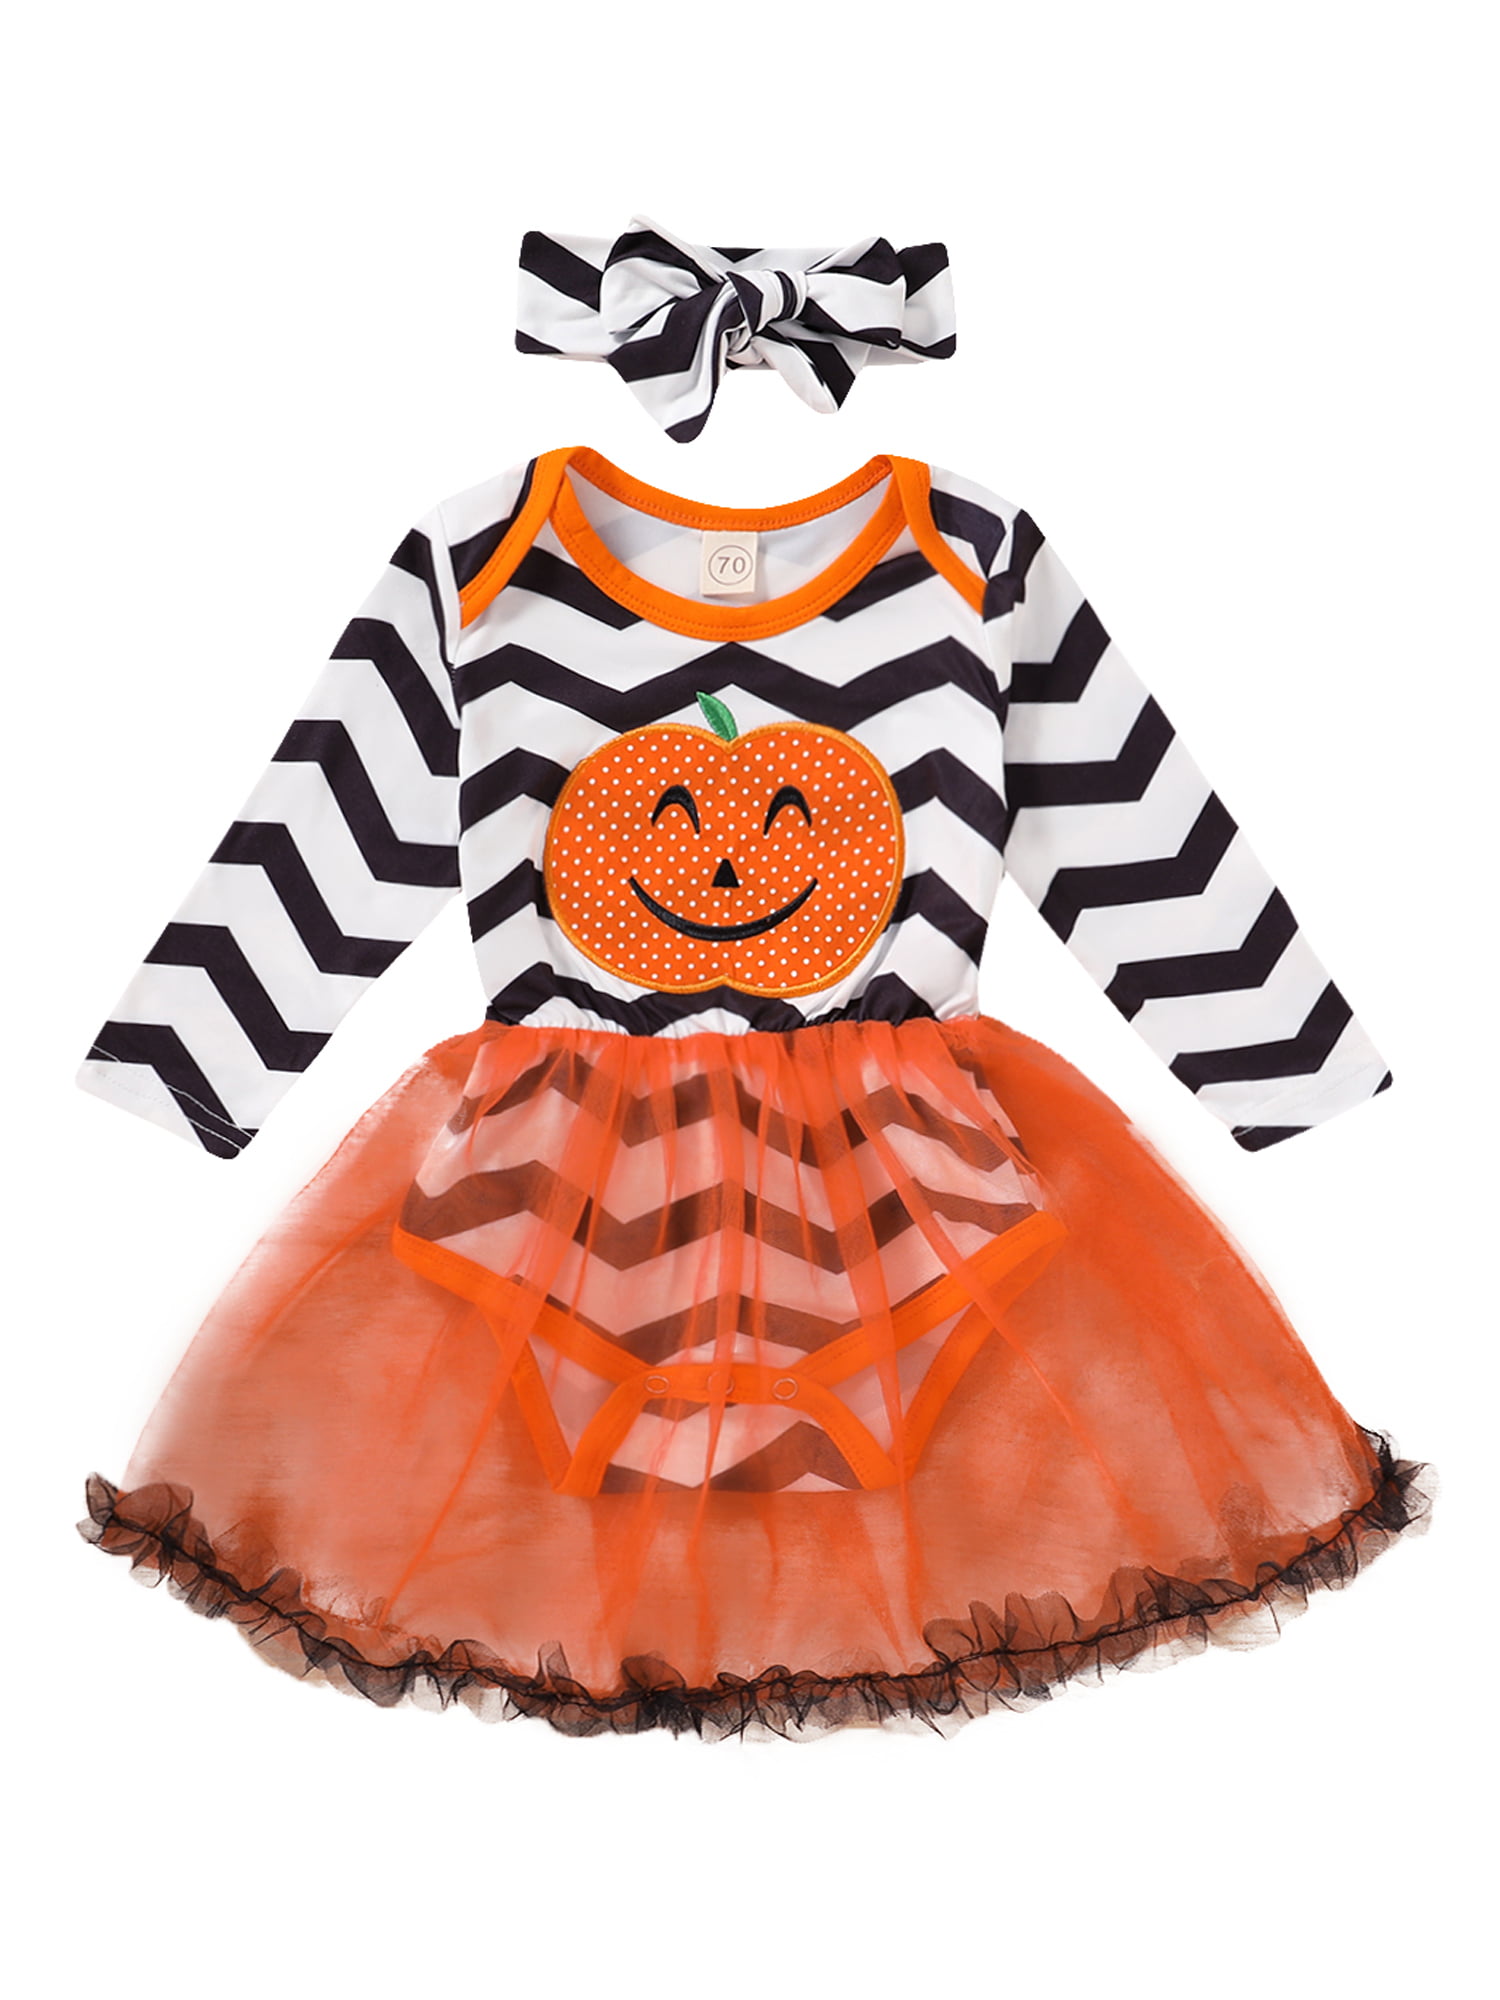 Details about   Toddler Girls~Ladybug Girl~Skirt 18 Months~Halloween~Orange &Black polka Dot~NWT